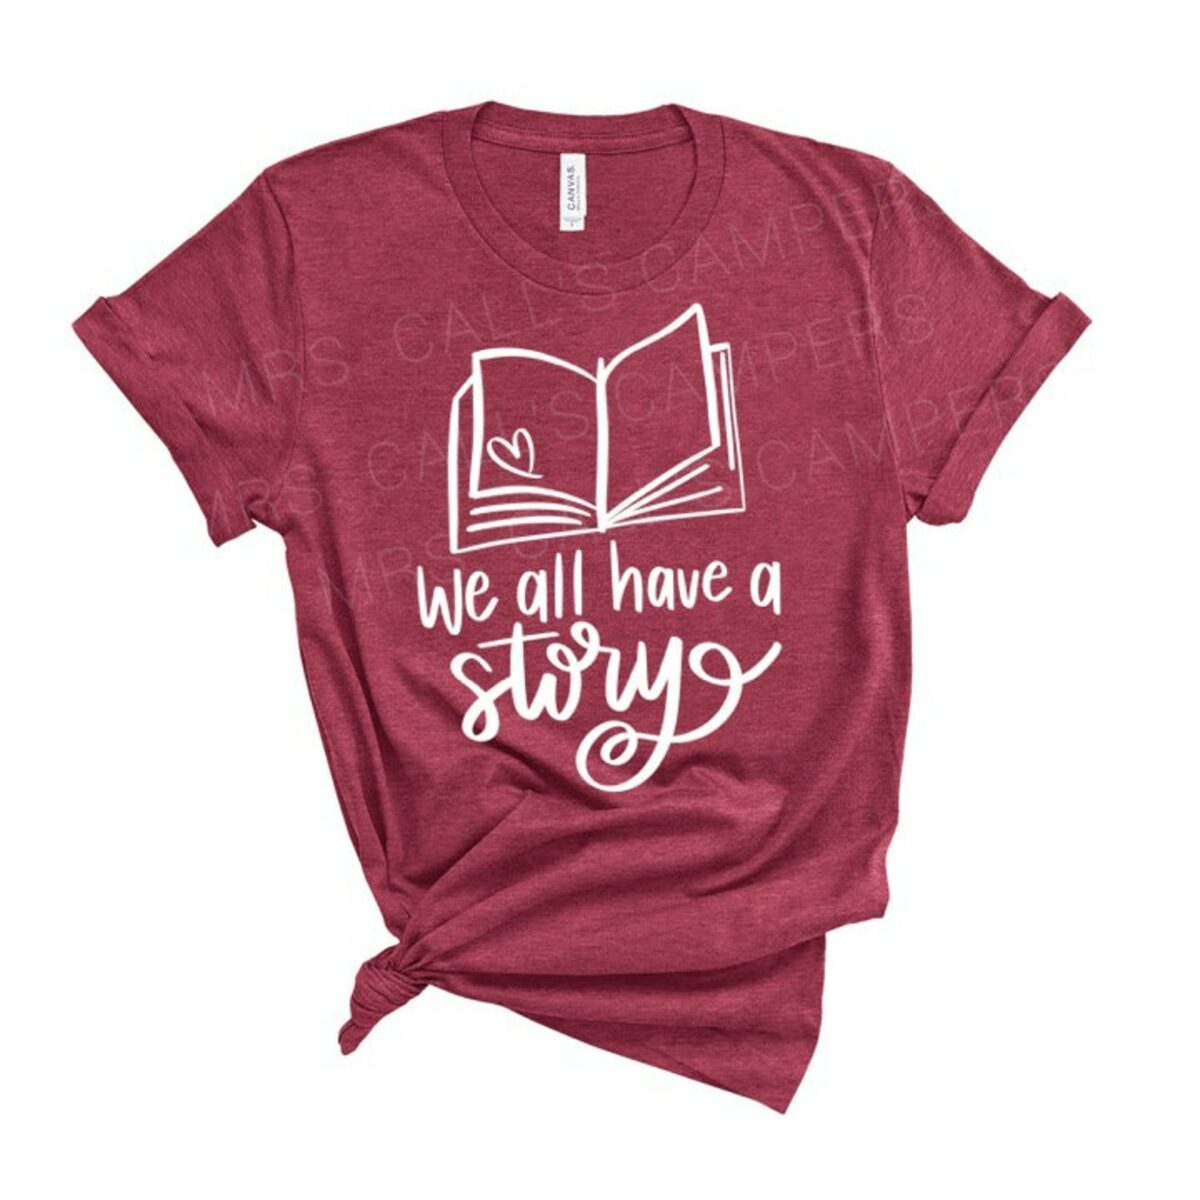 teacher t-shirt: We all have a story